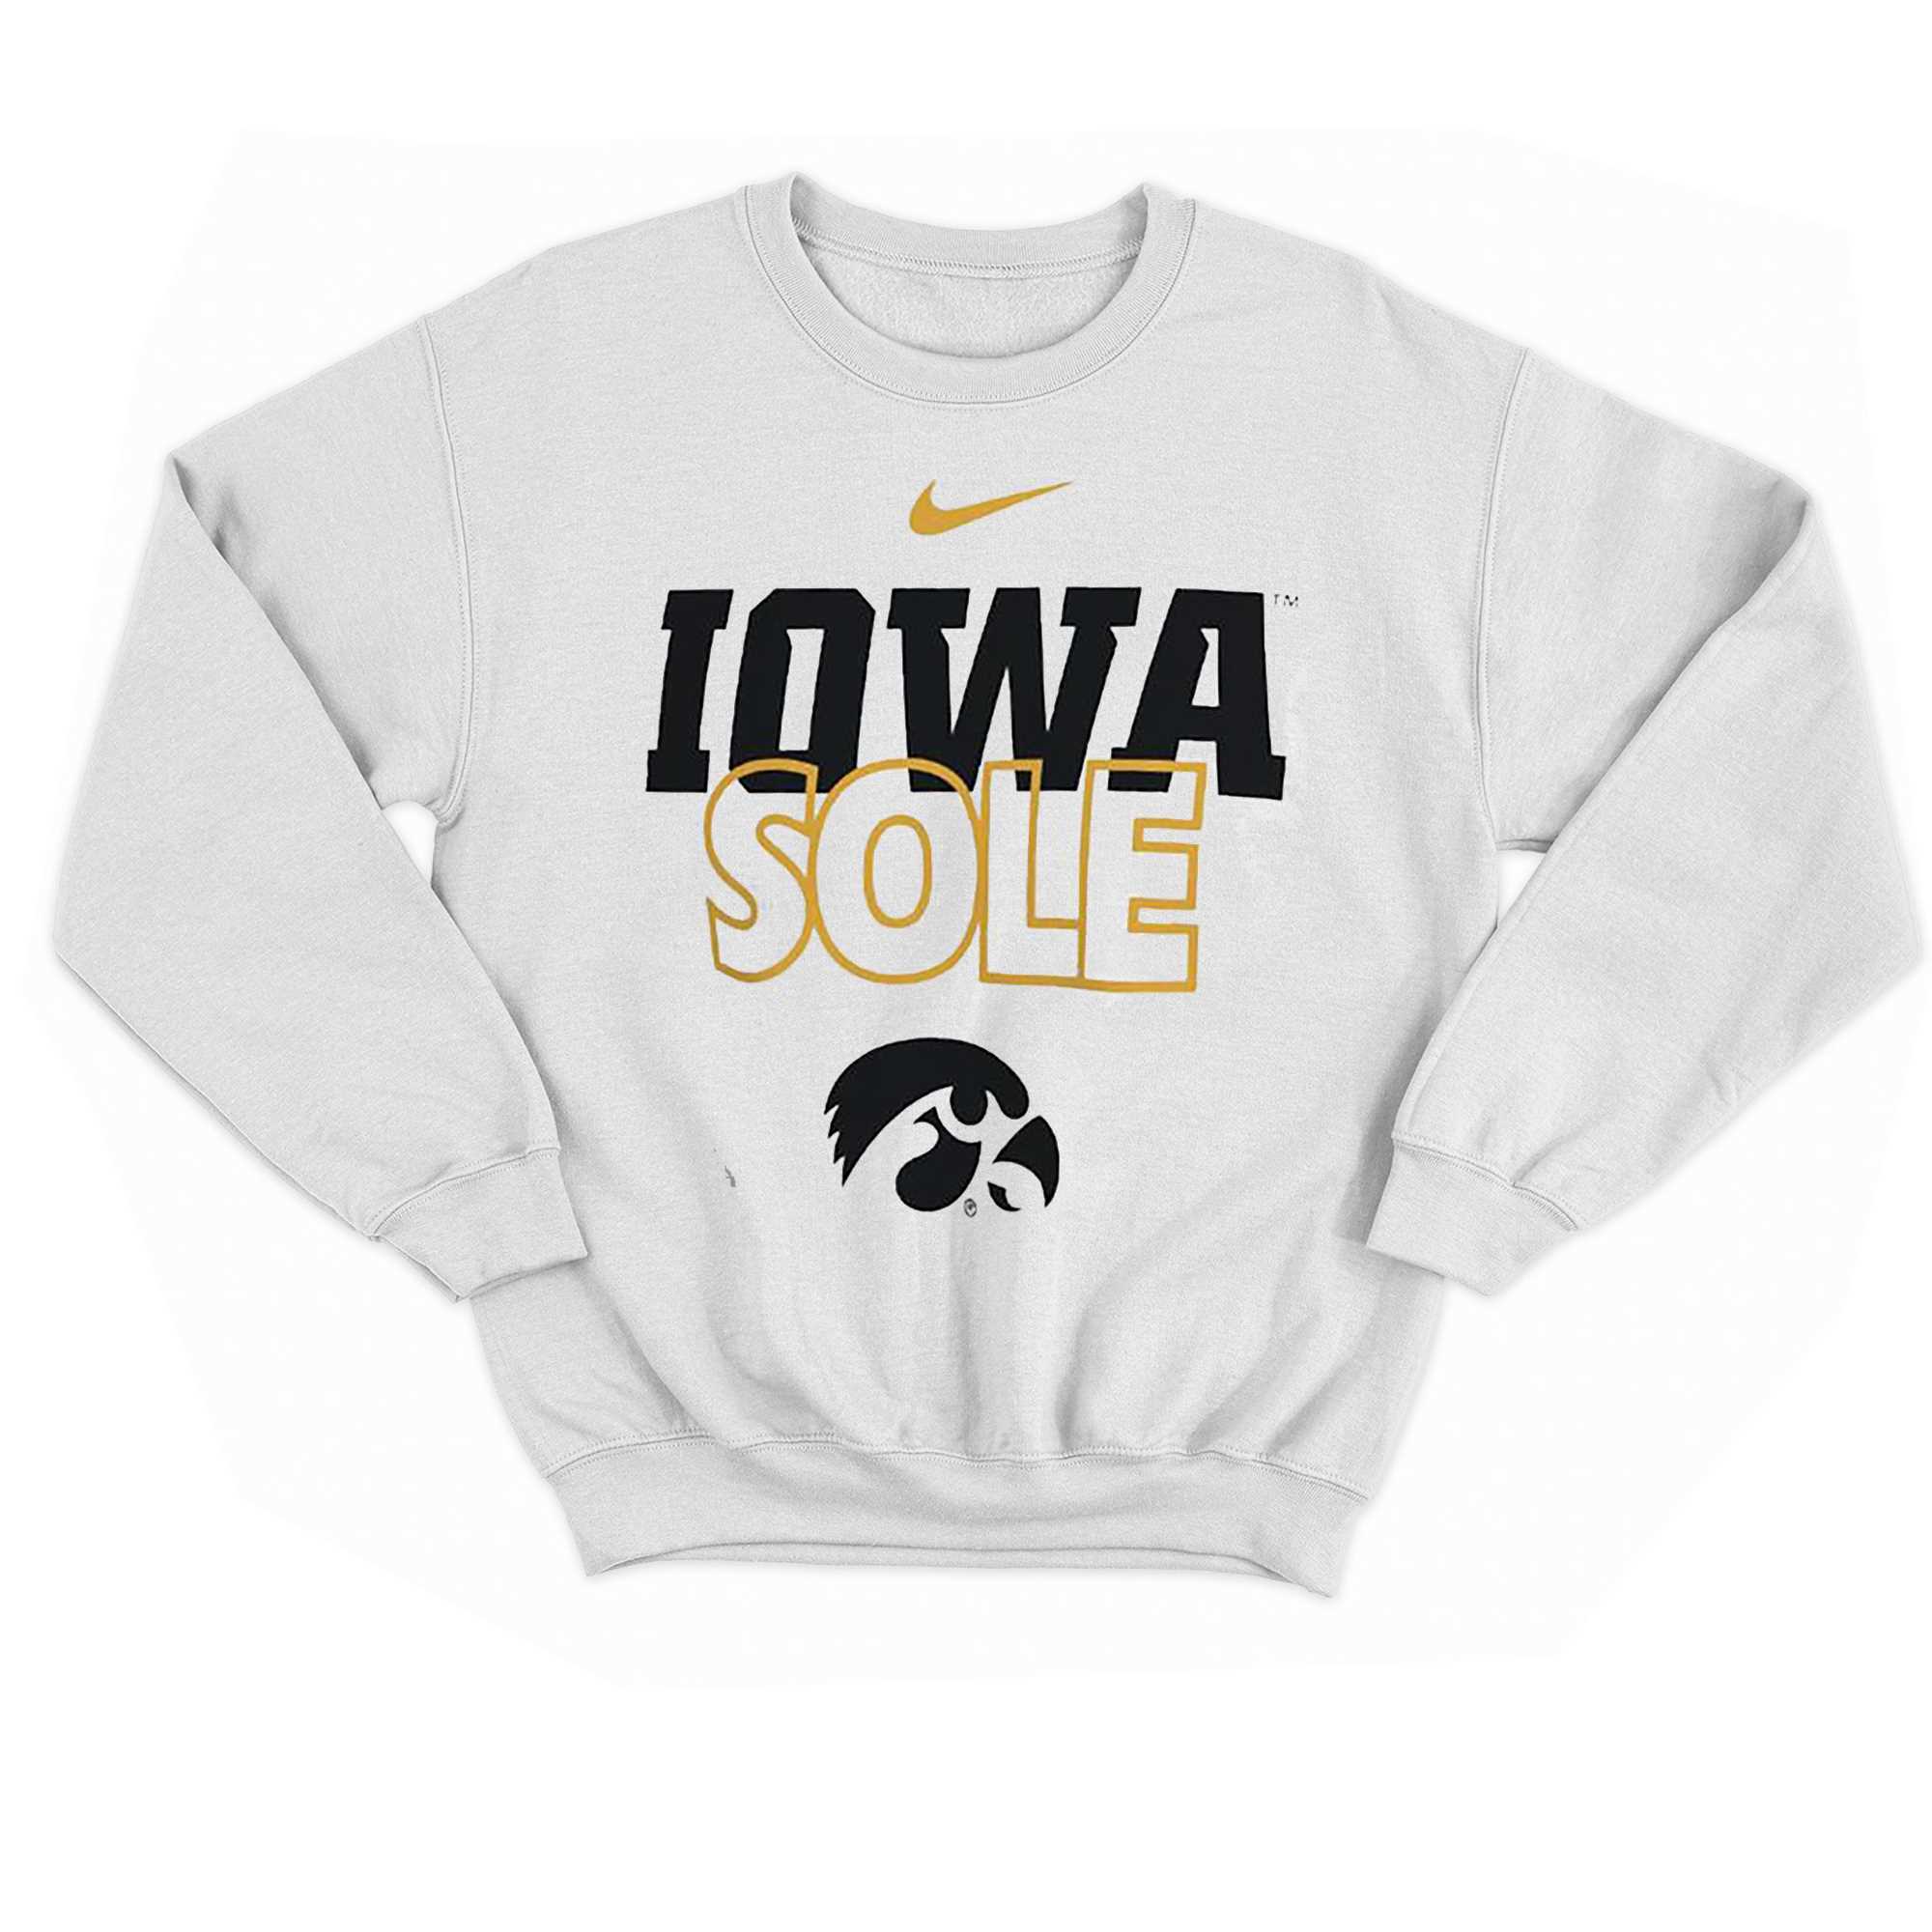 University Of Iowa Basketball Nike Iowa Sole Shirt 